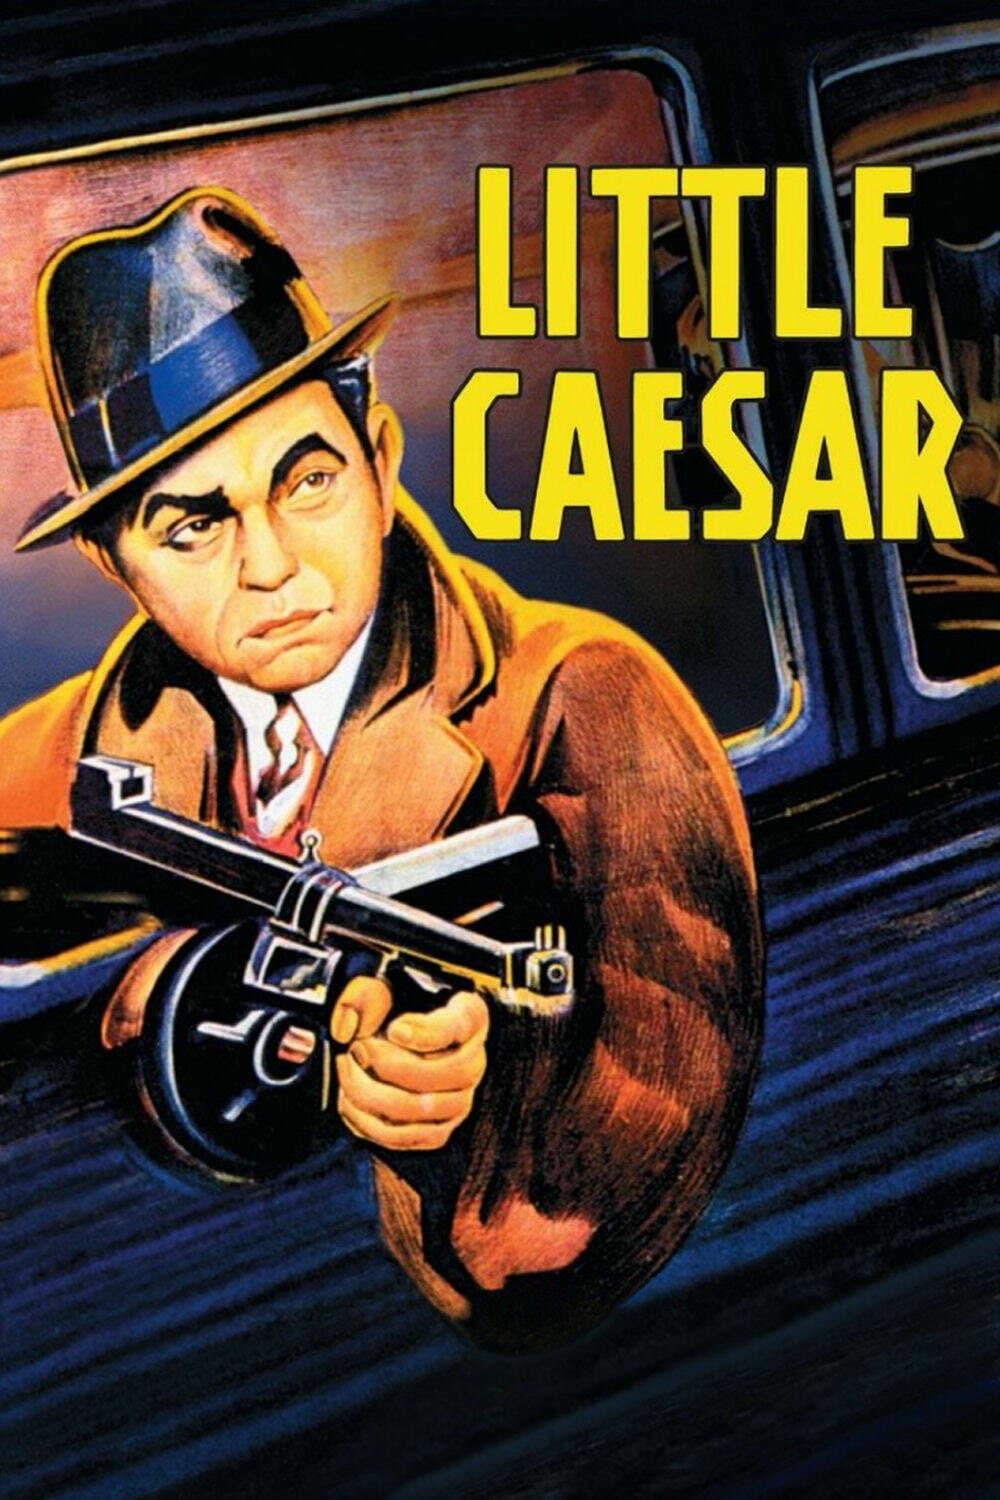 Little Caesar poster